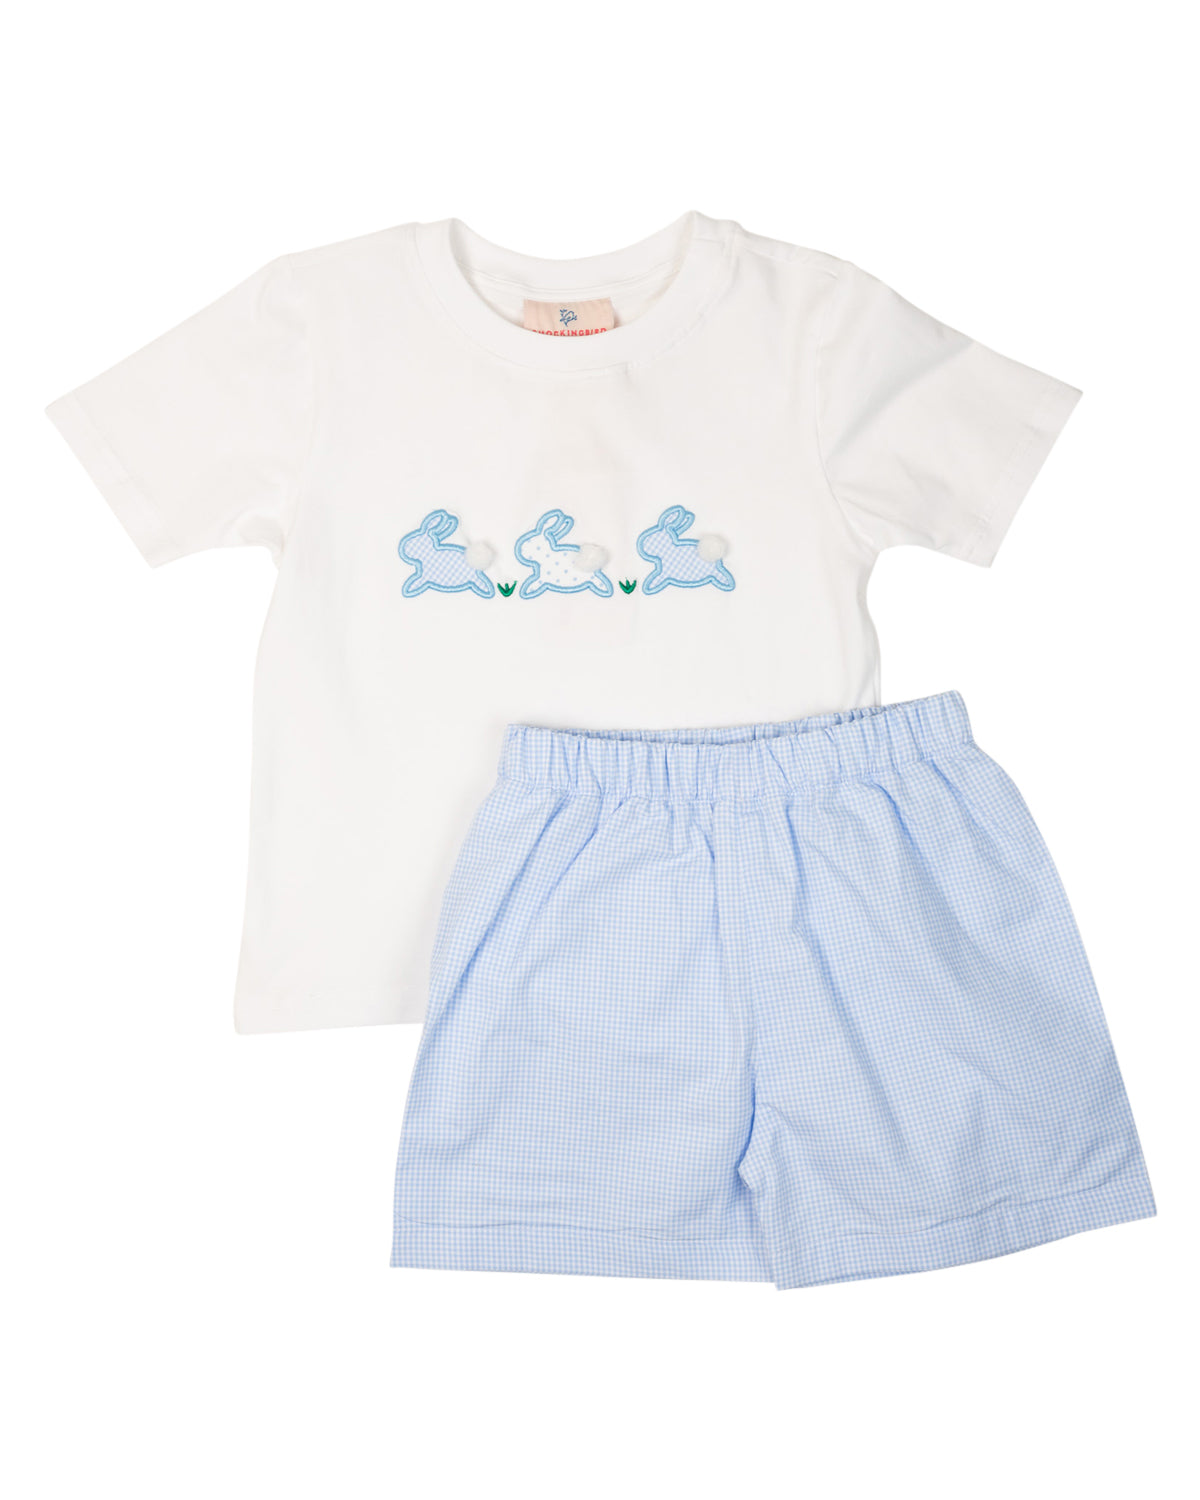 Little Hoppers Bunny Applique Shorts Set in Blue-FINAL SALE